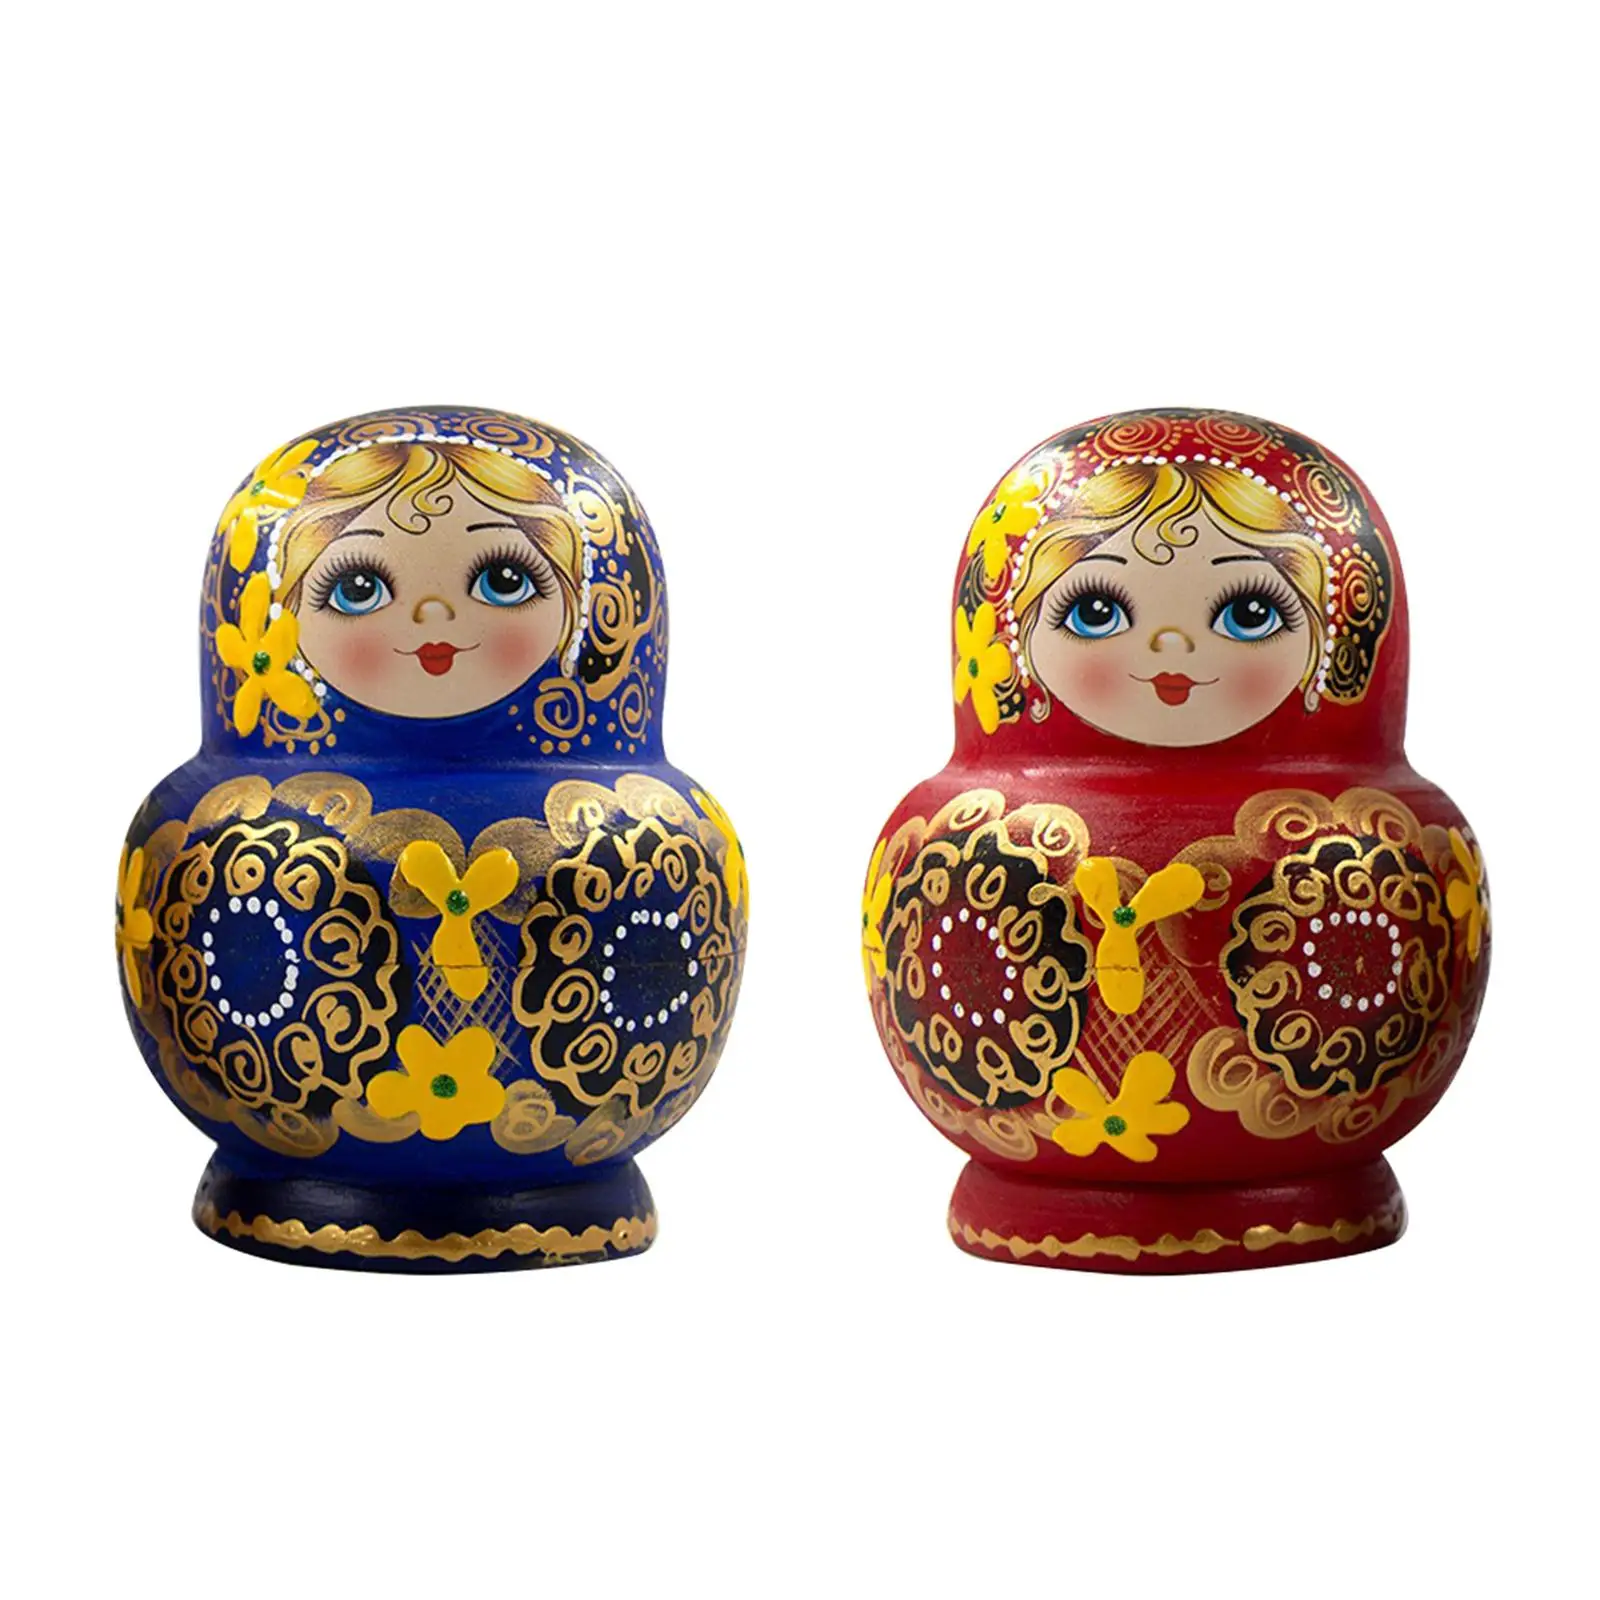 10 Pieces Creative Russian Nesting Dolls Matryoshka Dolls for Room Decor